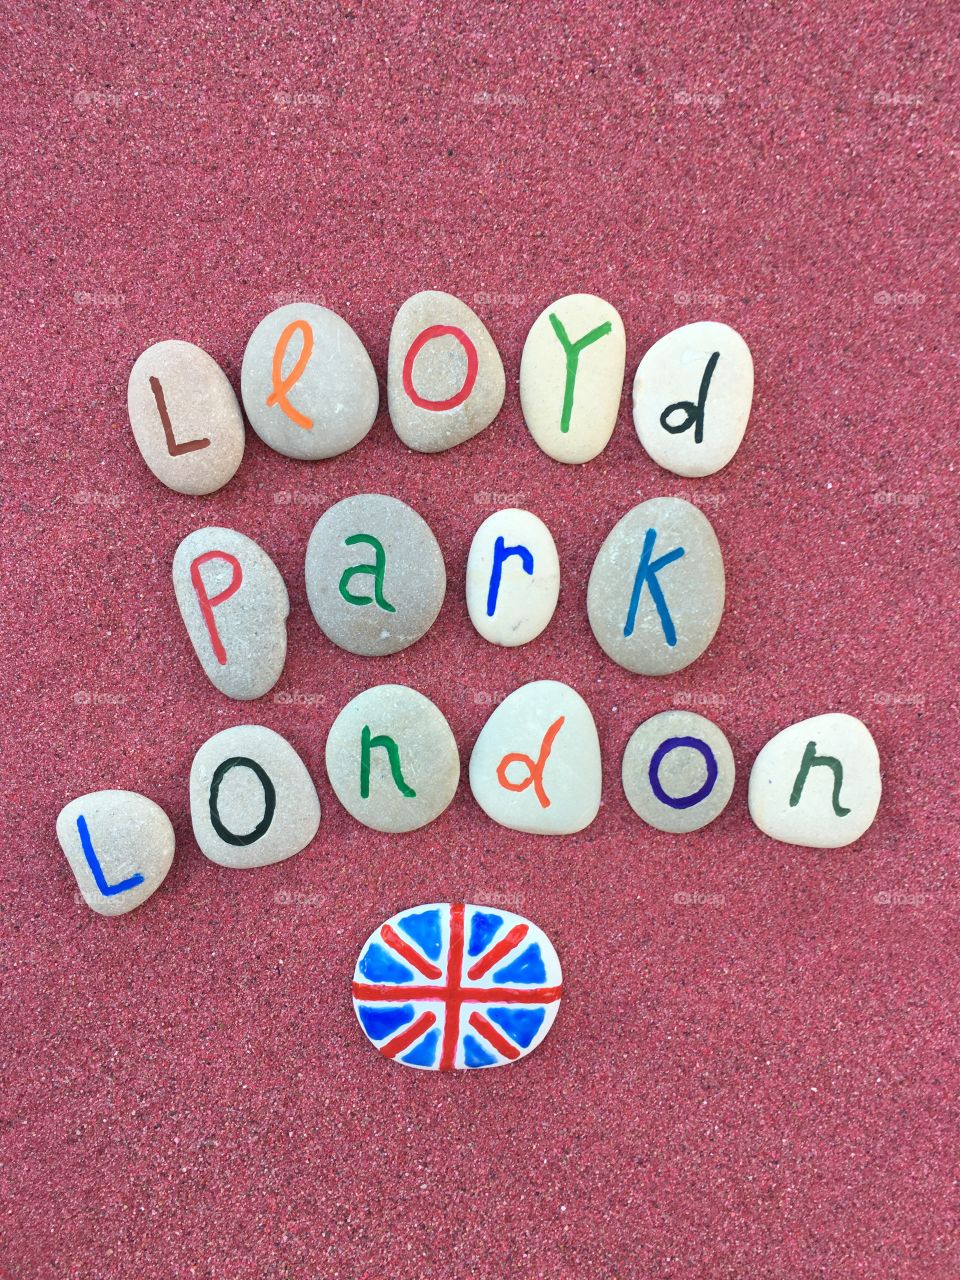 Lloyd Park, London